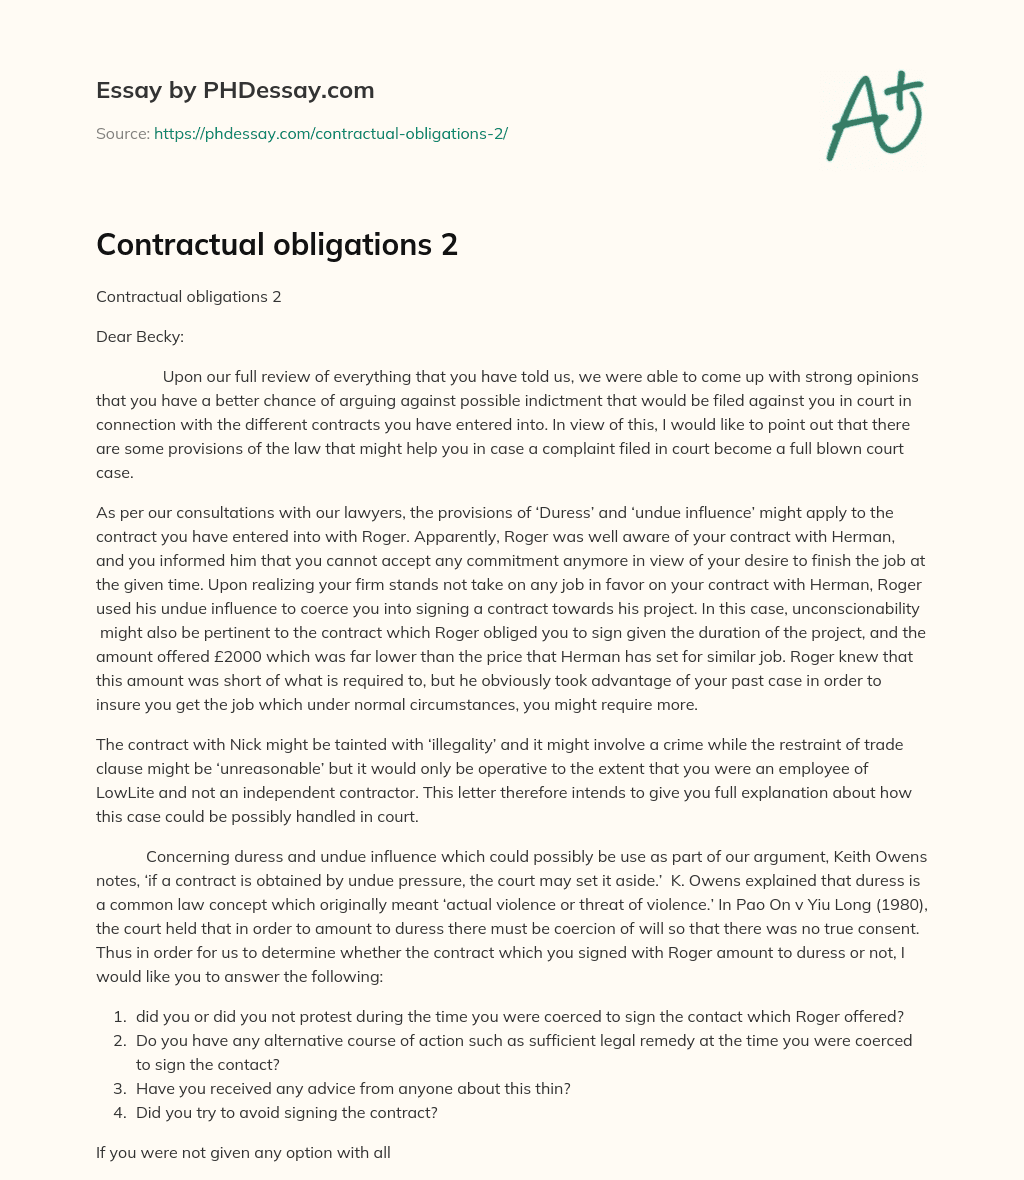 Contractual obligations 2 essay